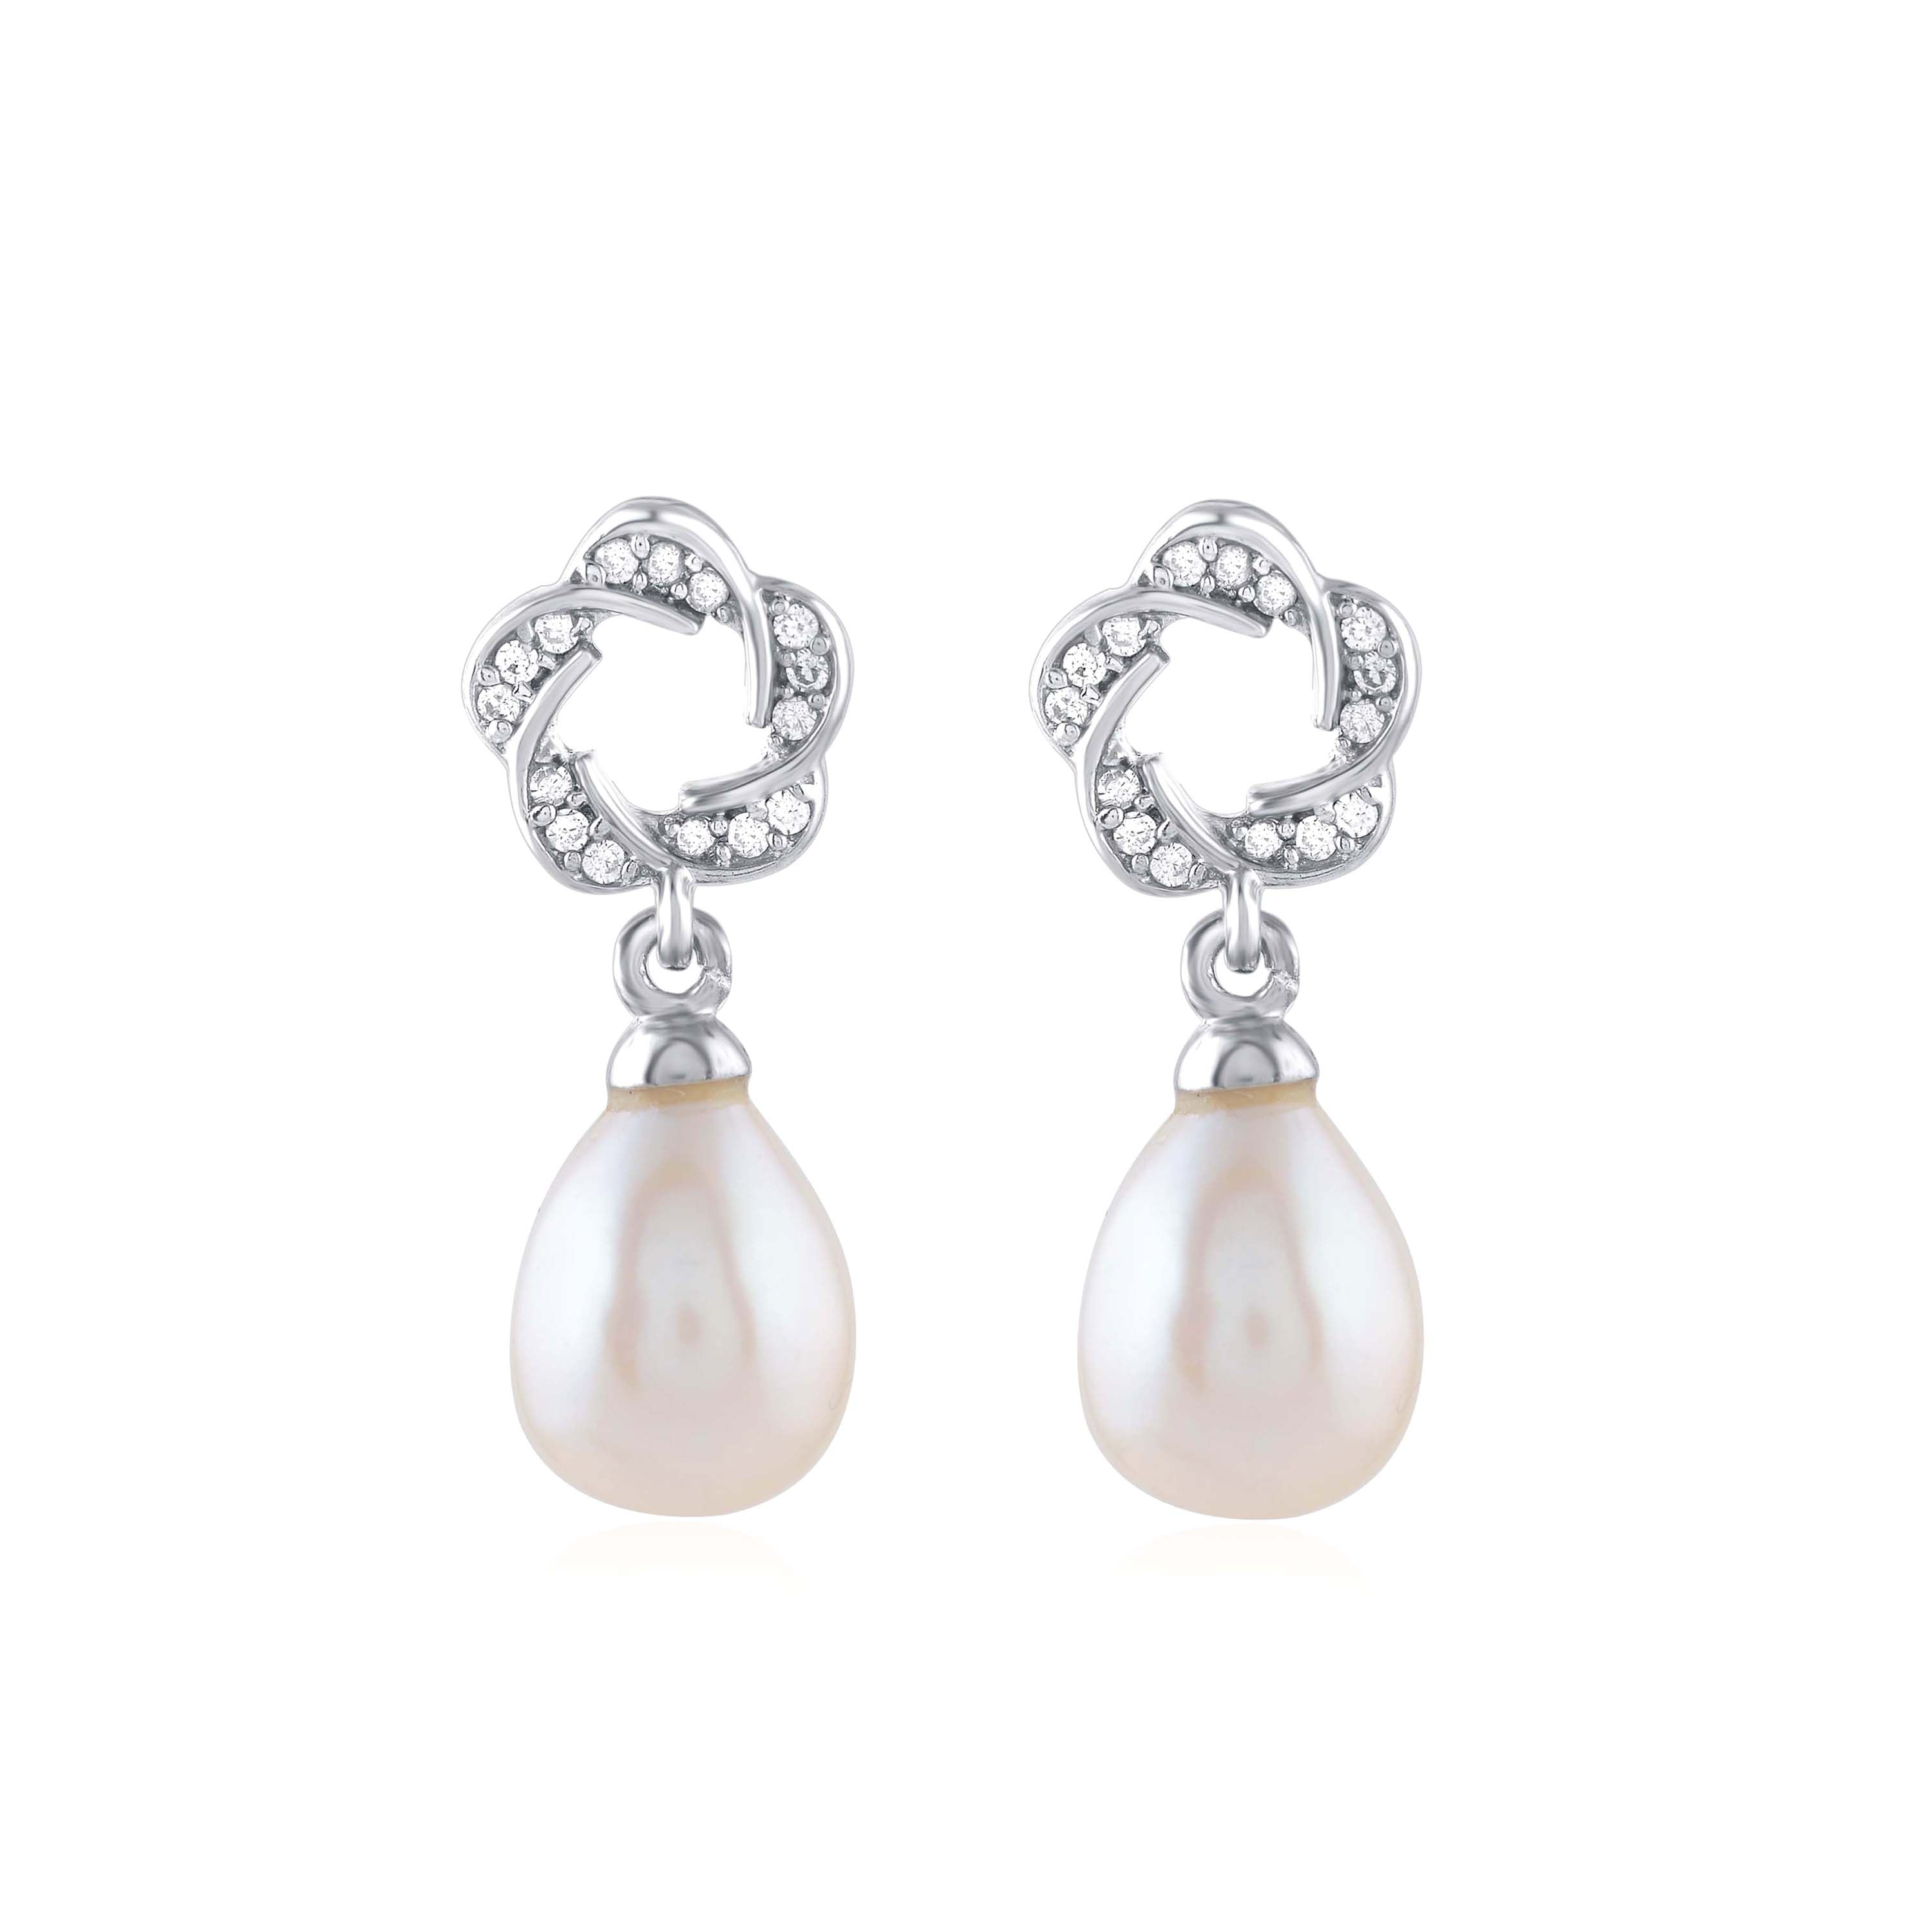 Elegant and Stunning Silver Pearl Drop Earrings - Krishna Jewellers Pearls and Gems